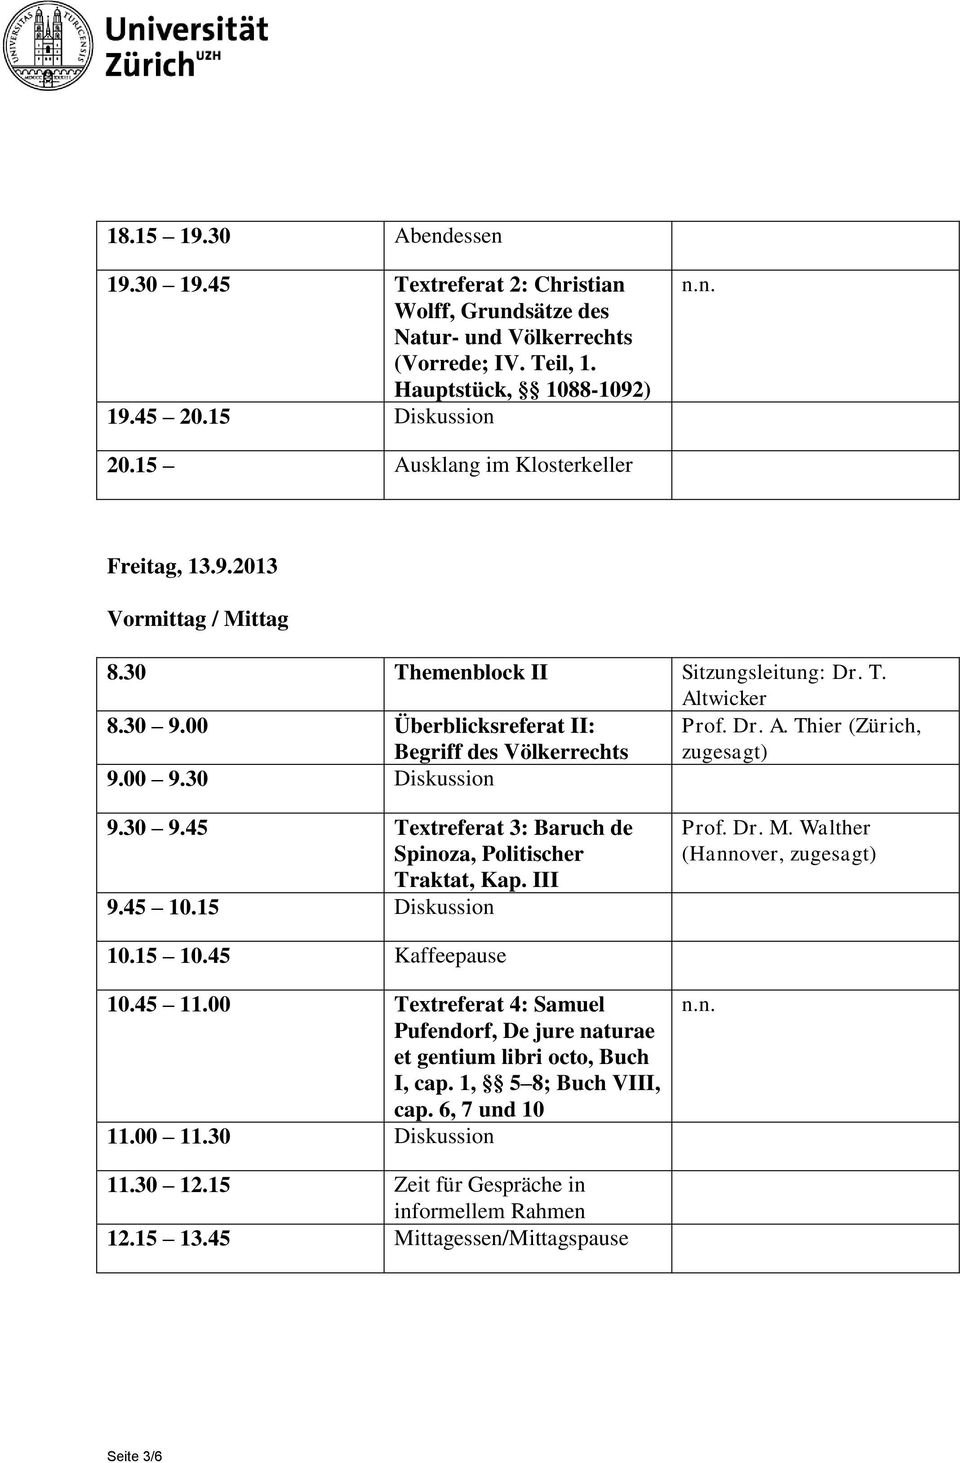 00 9.30 Diskussion 9.30 9.45 Textreferat 3: Baruch de Spinoza, Politischer Traktat, Kap. III 9.45 10.15 Diskussion Prof. Dr. M. Walther (Hannover, 10.15 10.45 Kaffeepause 10.45 11.